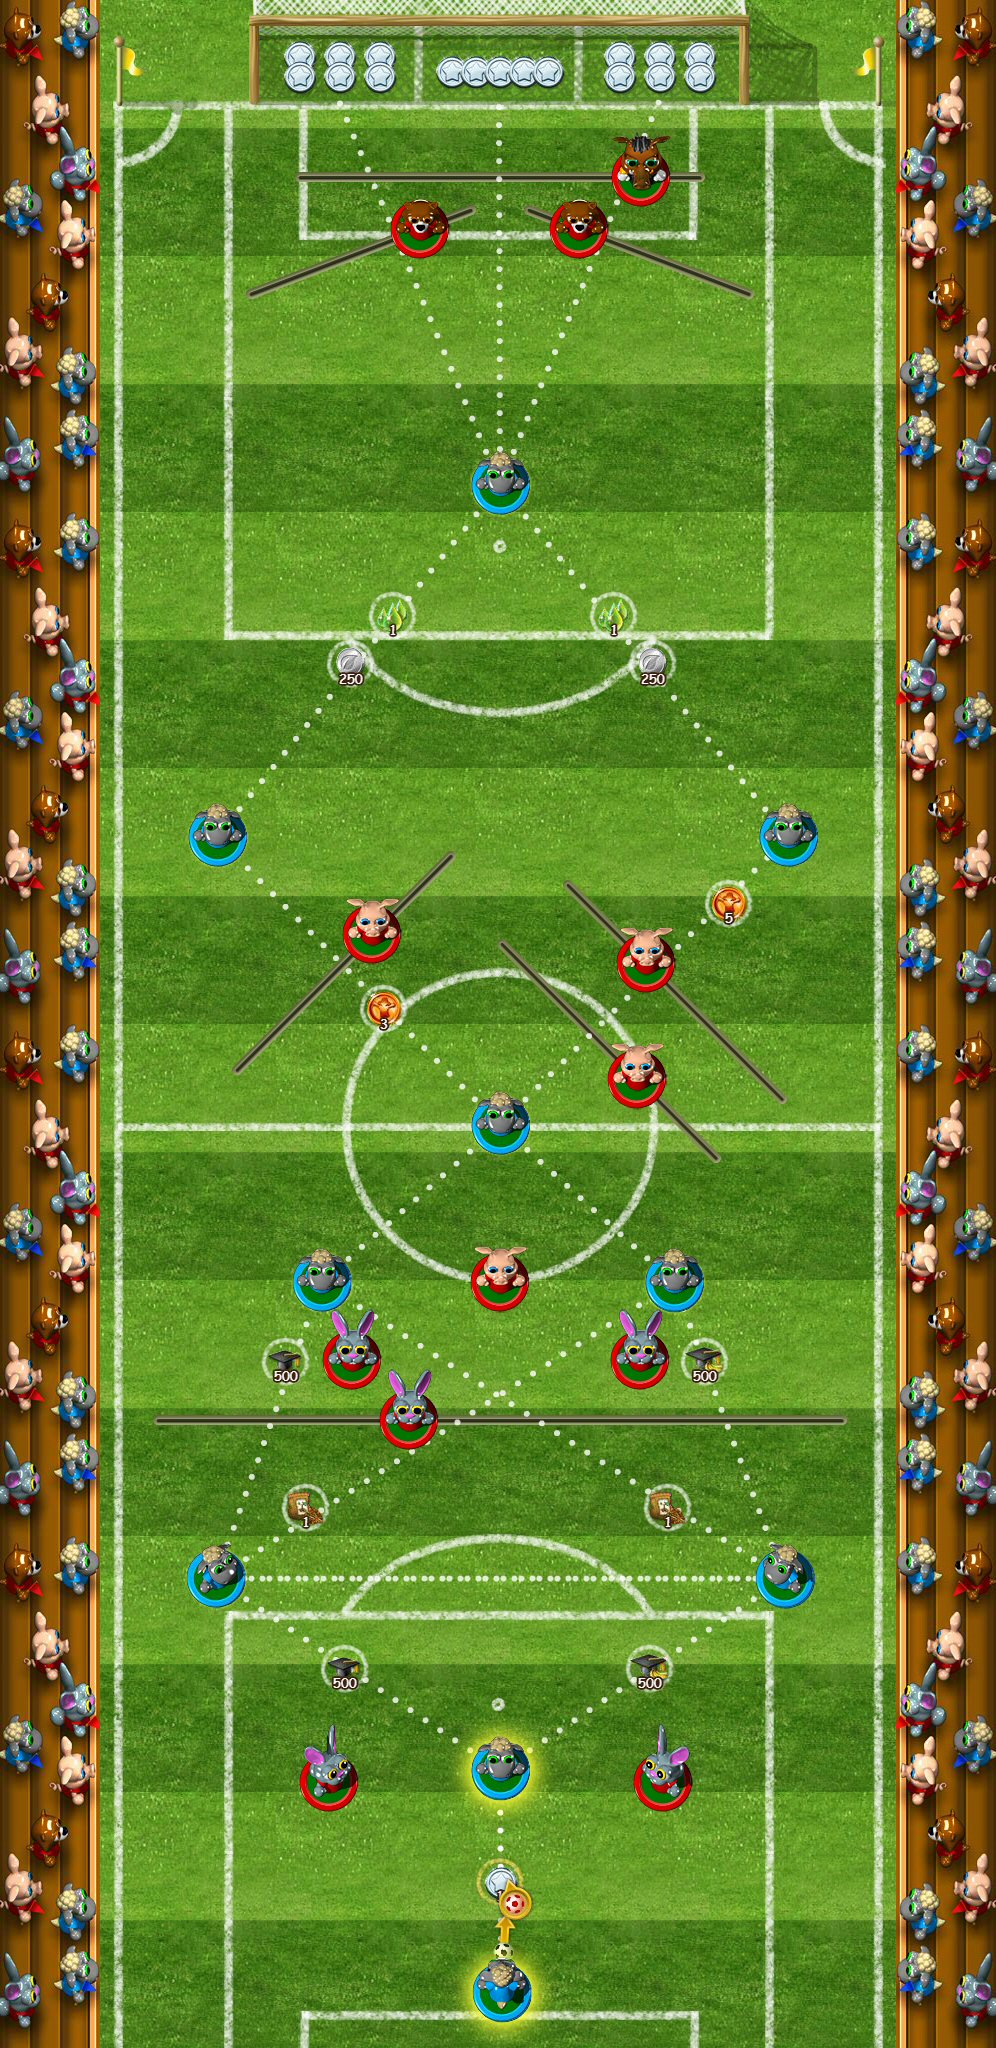 soccerjul2019_layout0.jpg